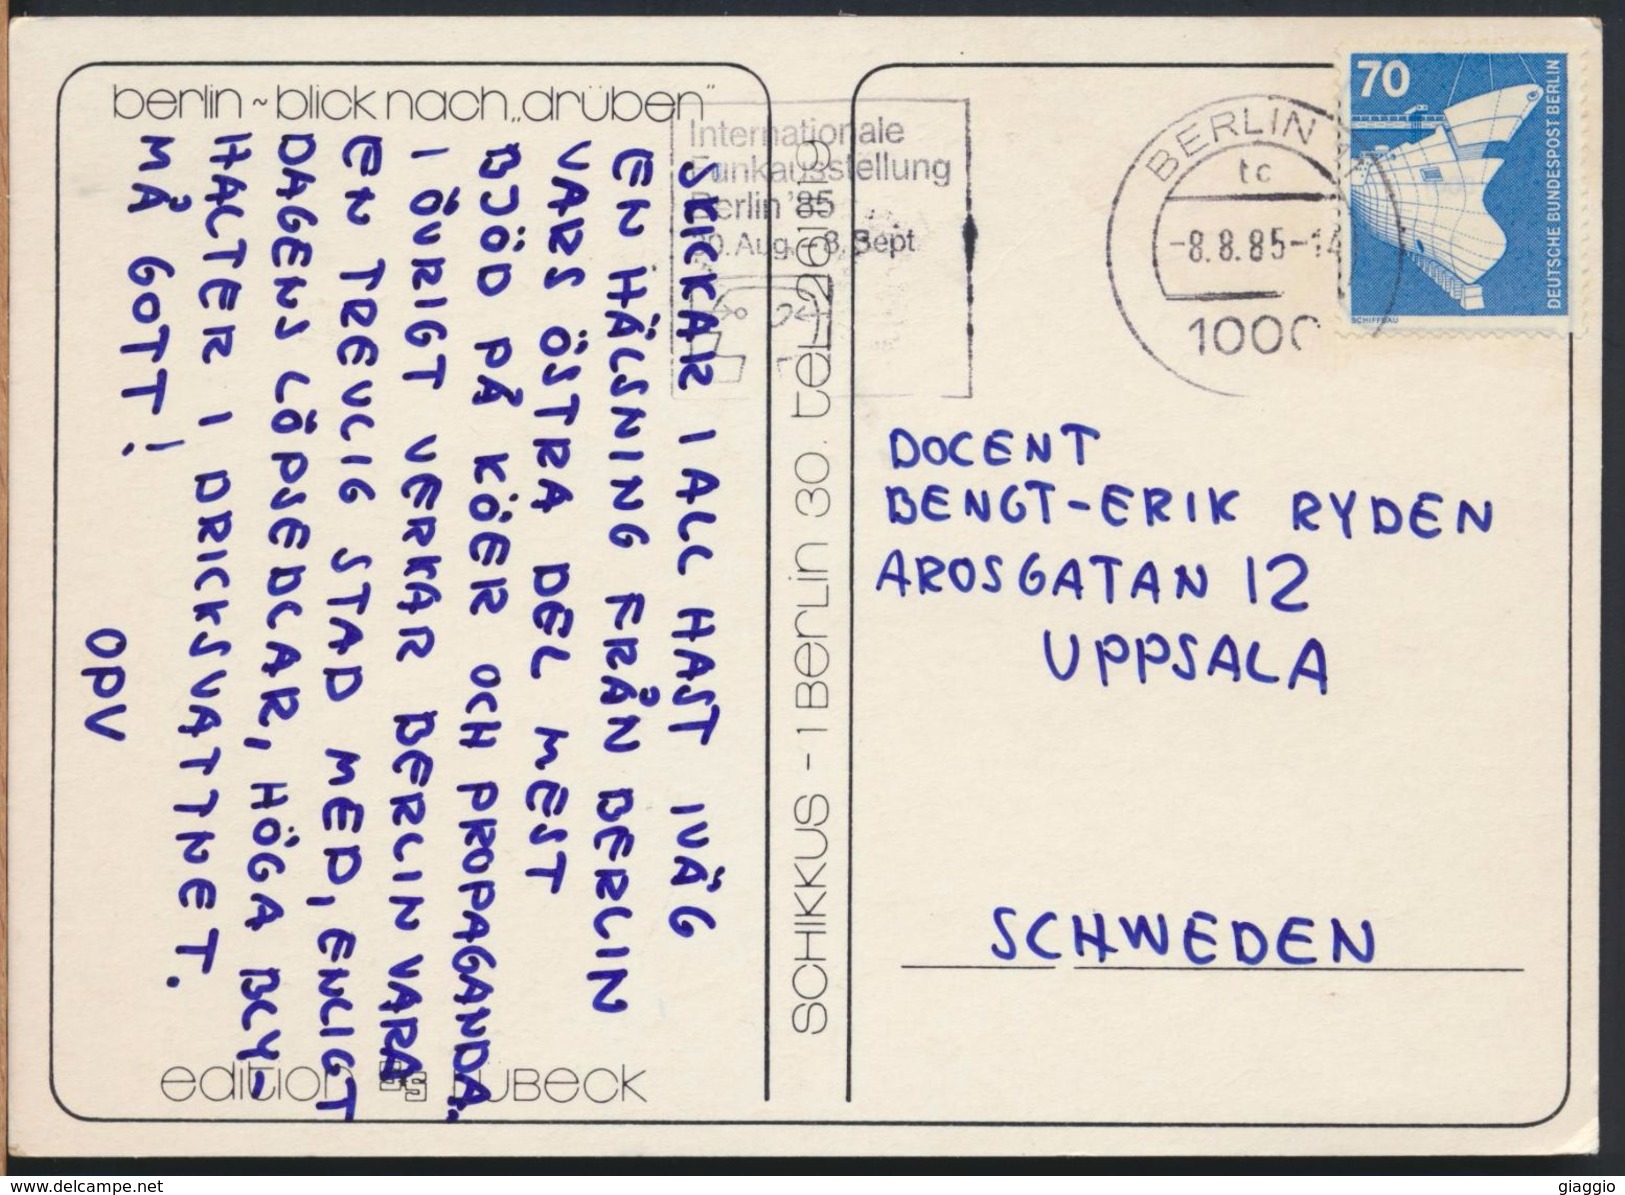 °°° 5115 - GERMANY -  BERLIN - BLICK NACH DRUBEN - 1985 With Stamps °°° - Berliner Mauer